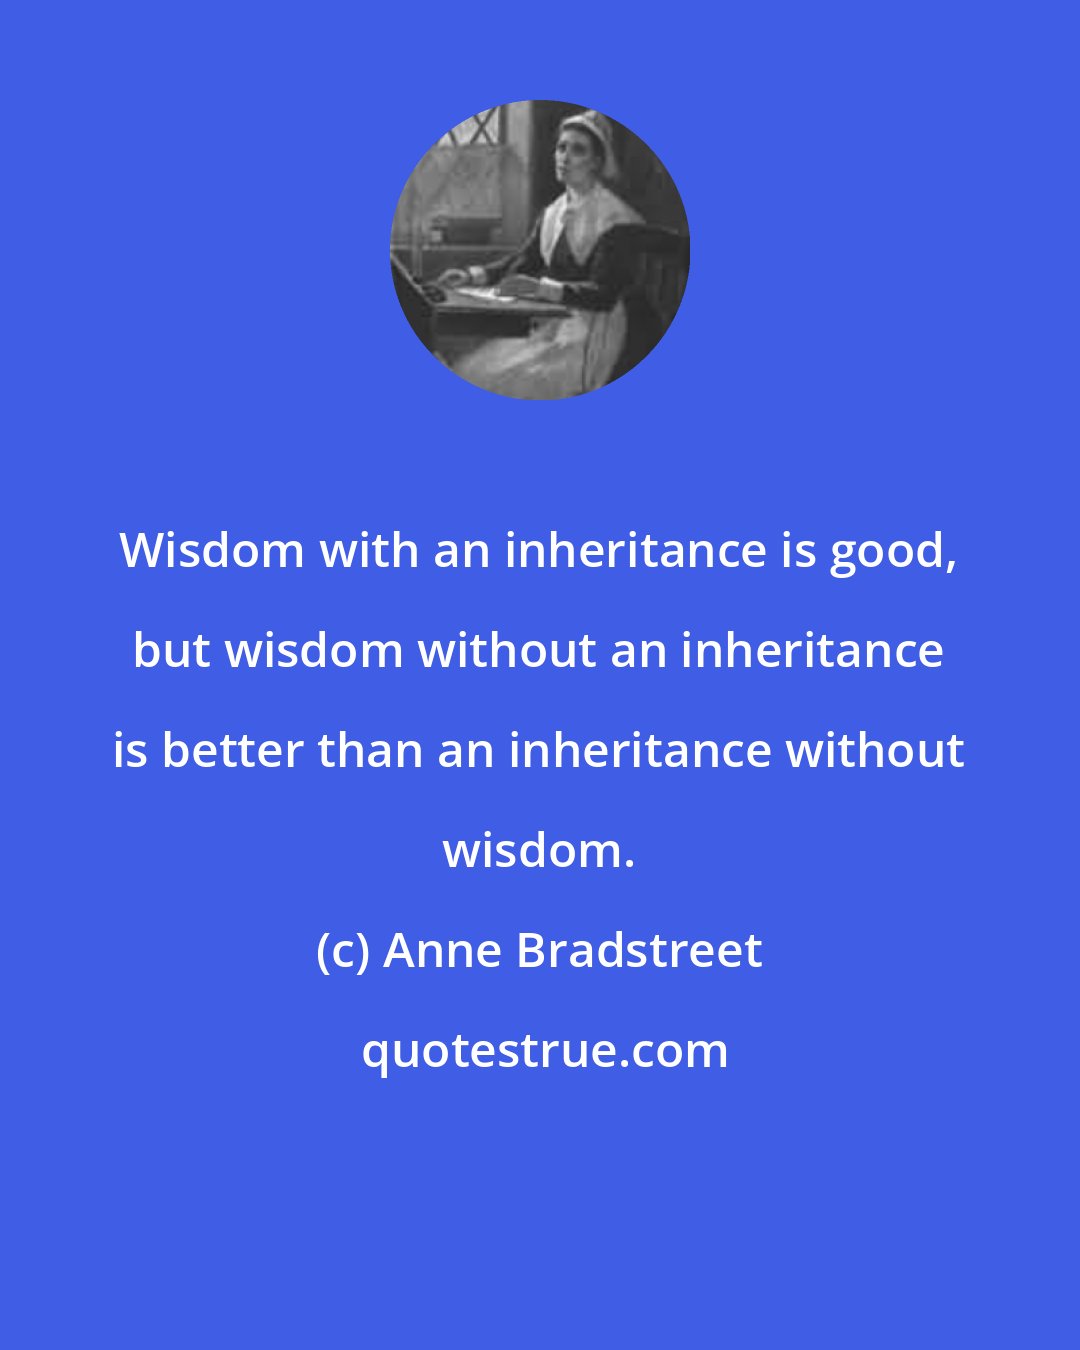 Anne Bradstreet: Wisdom with an inheritance is good, but wisdom without an inheritance is better than an inheritance without wisdom.